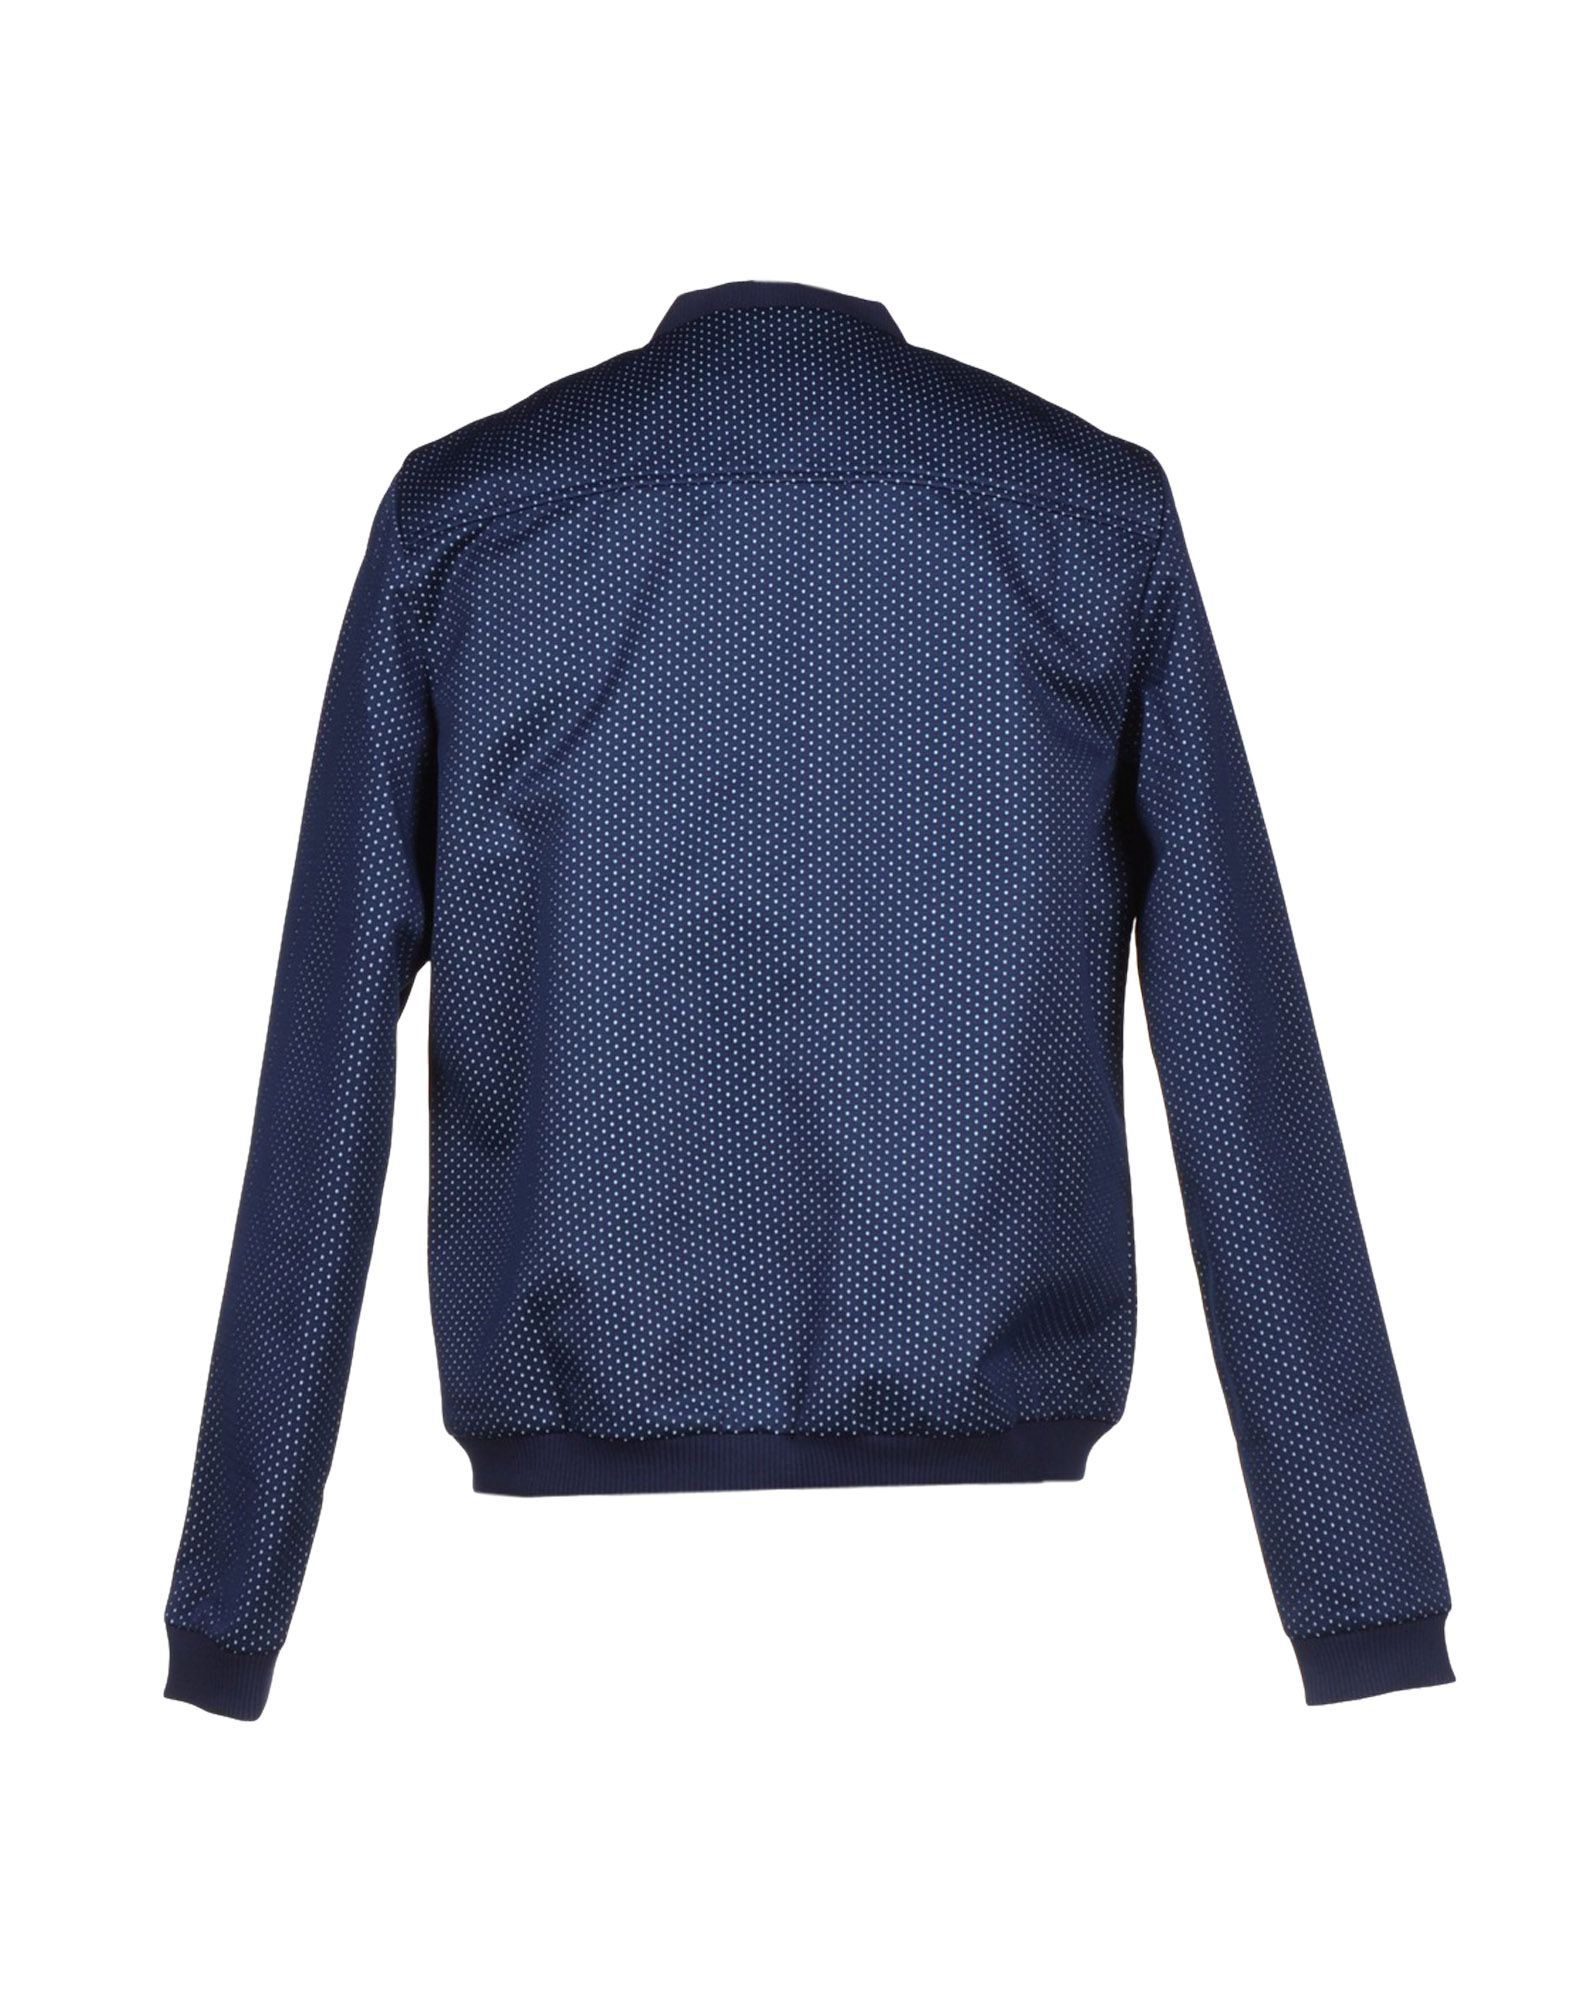 Lyst Libertine Libertine Jacket In Blue For Men